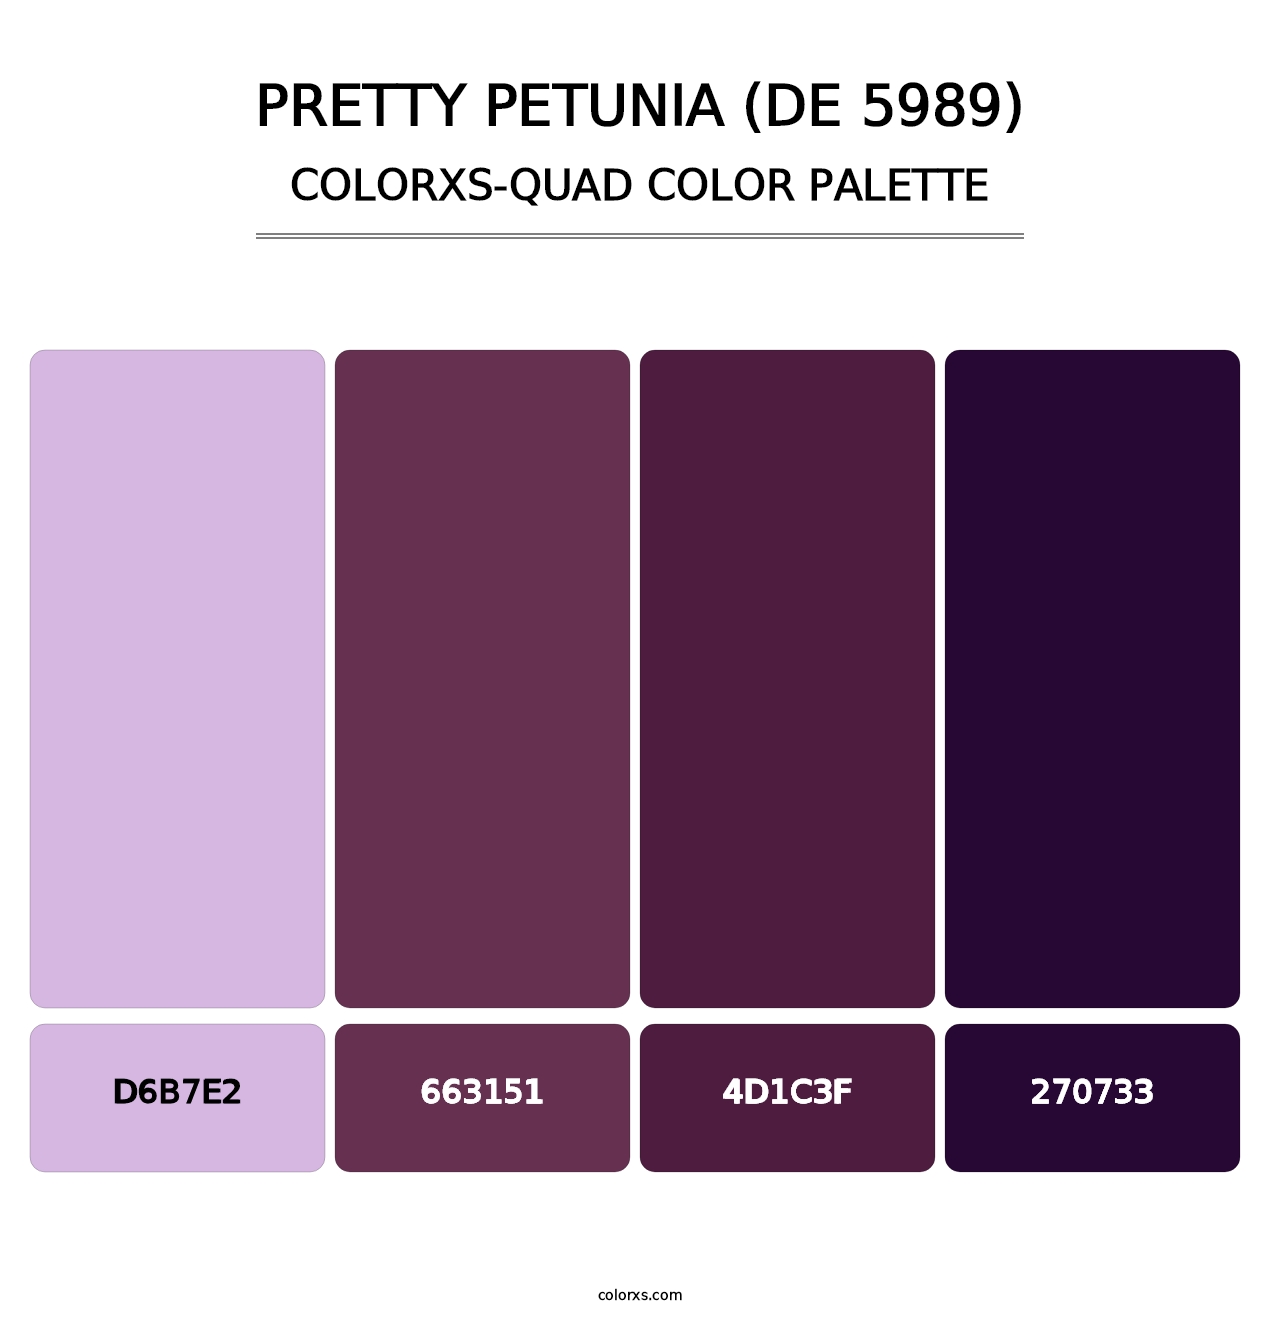 Pretty Petunia (DE 5989) - Colorxs Quad Palette